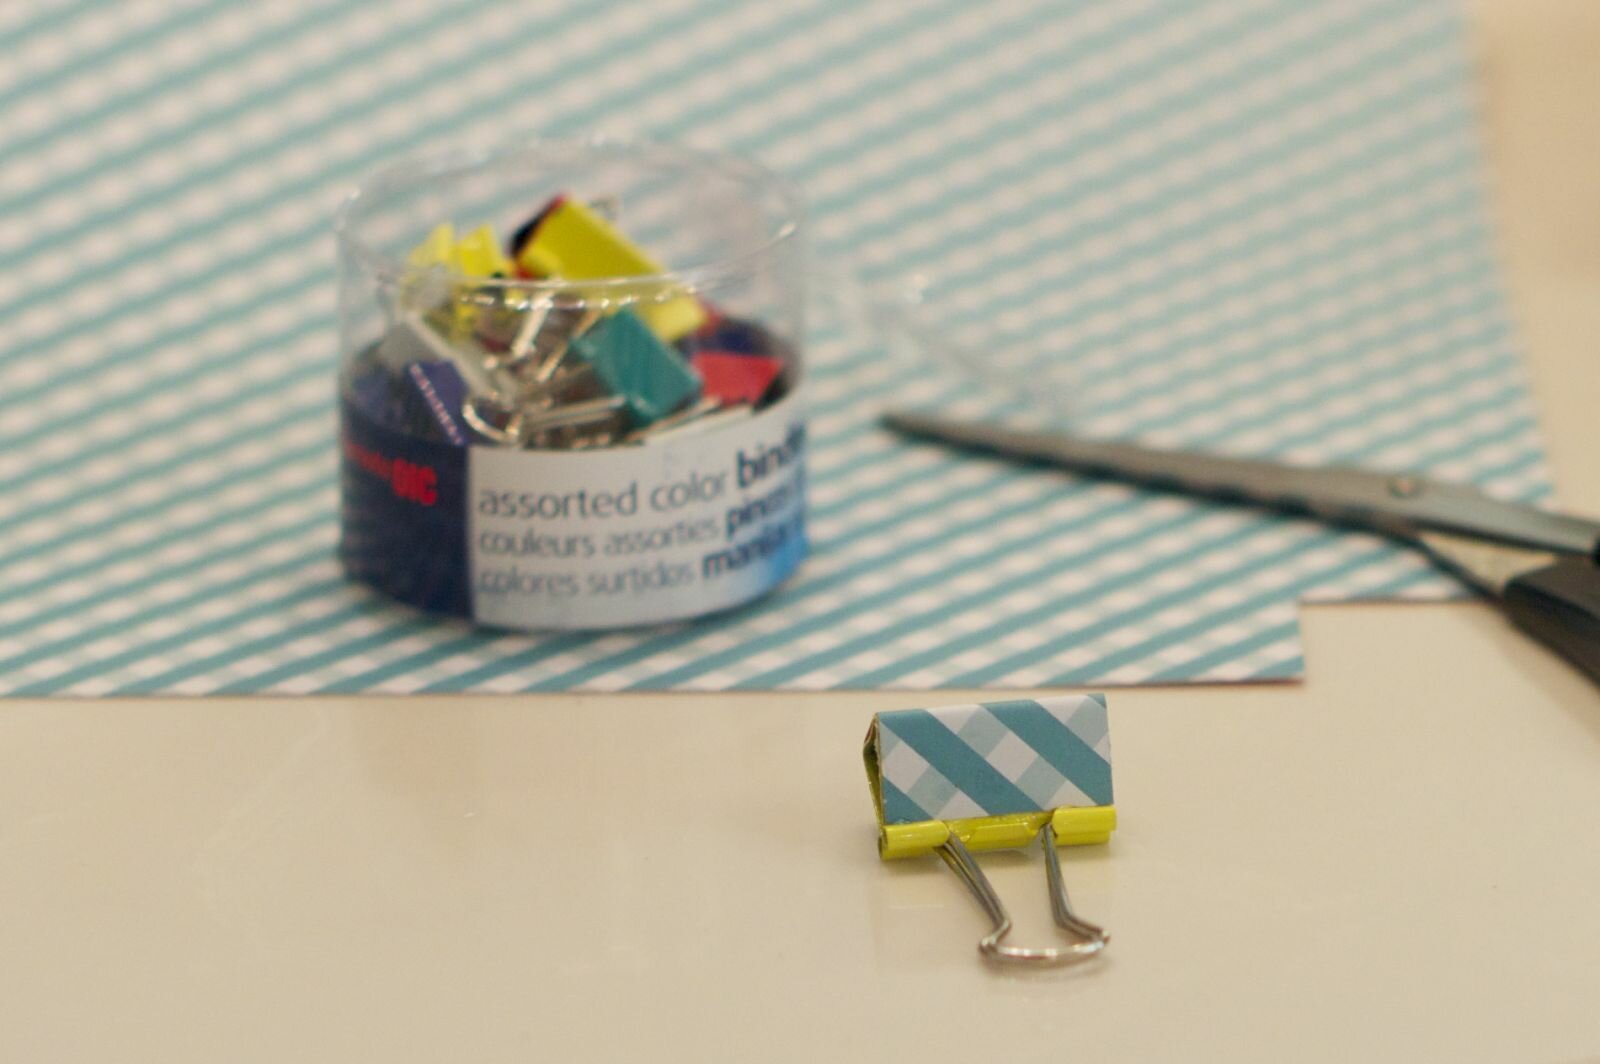 Decorative binder clips